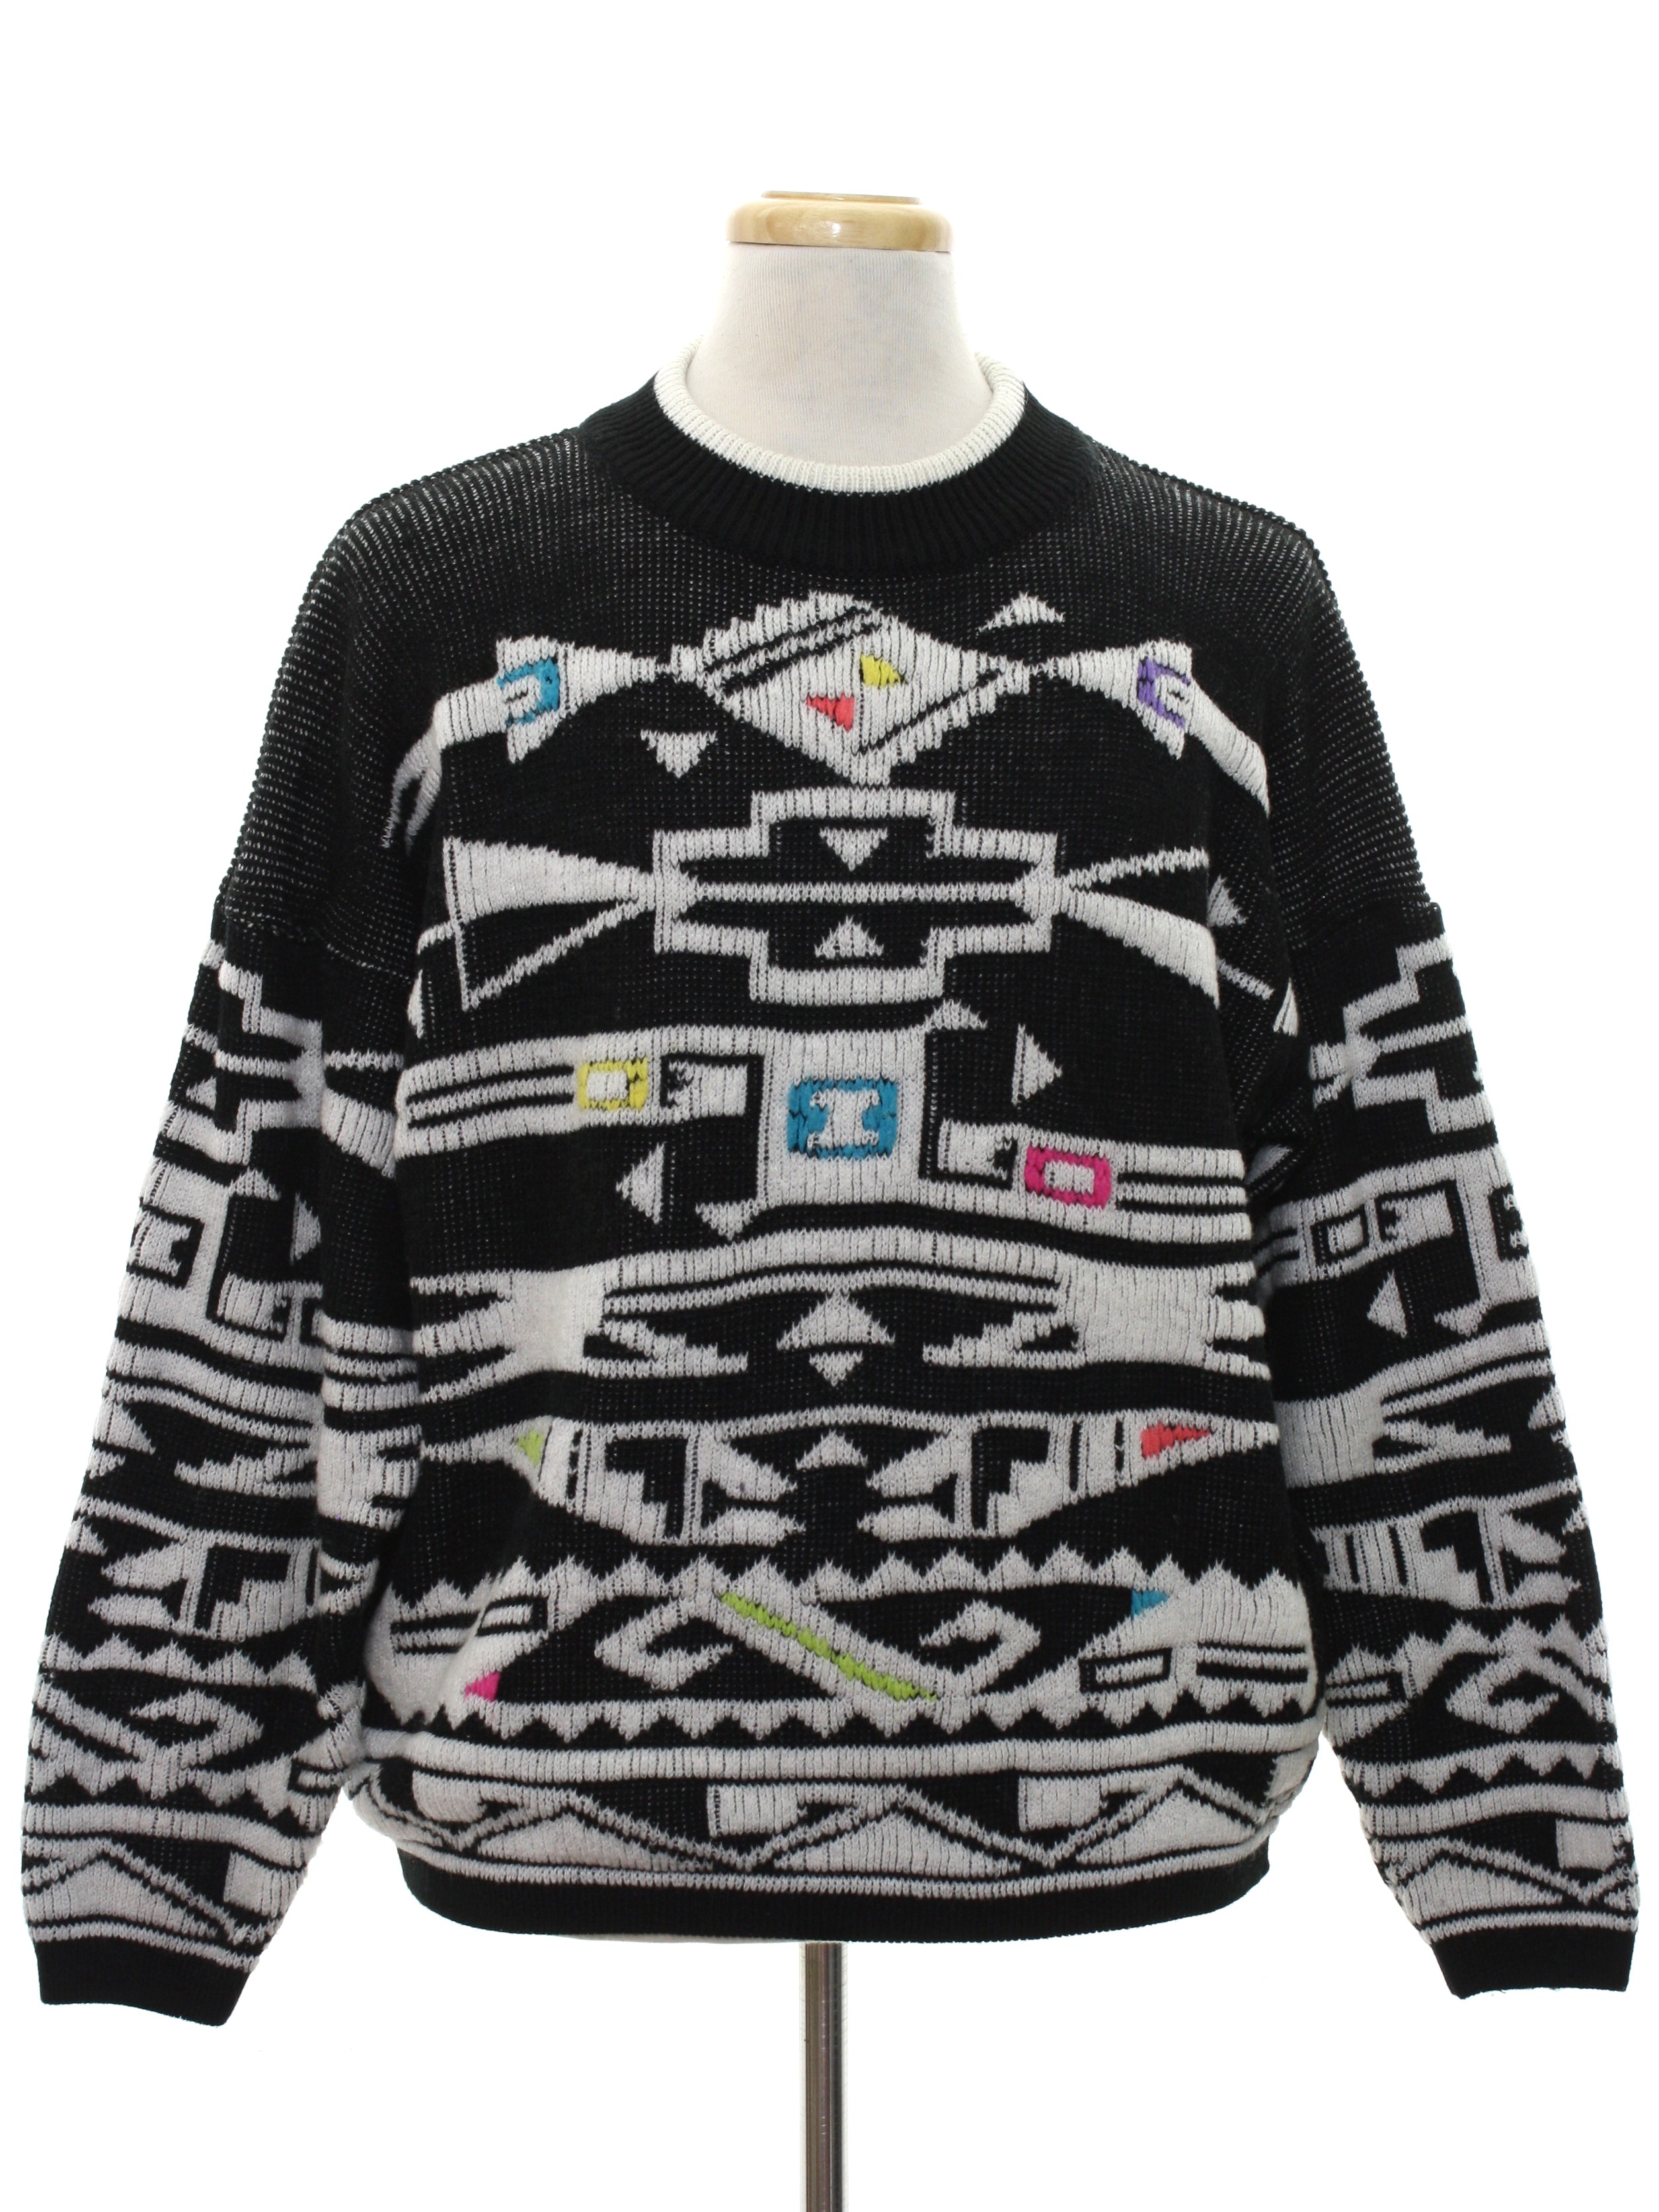 Retro 80s Sweater (Variations) : 80s -Variations-- Mens black ...